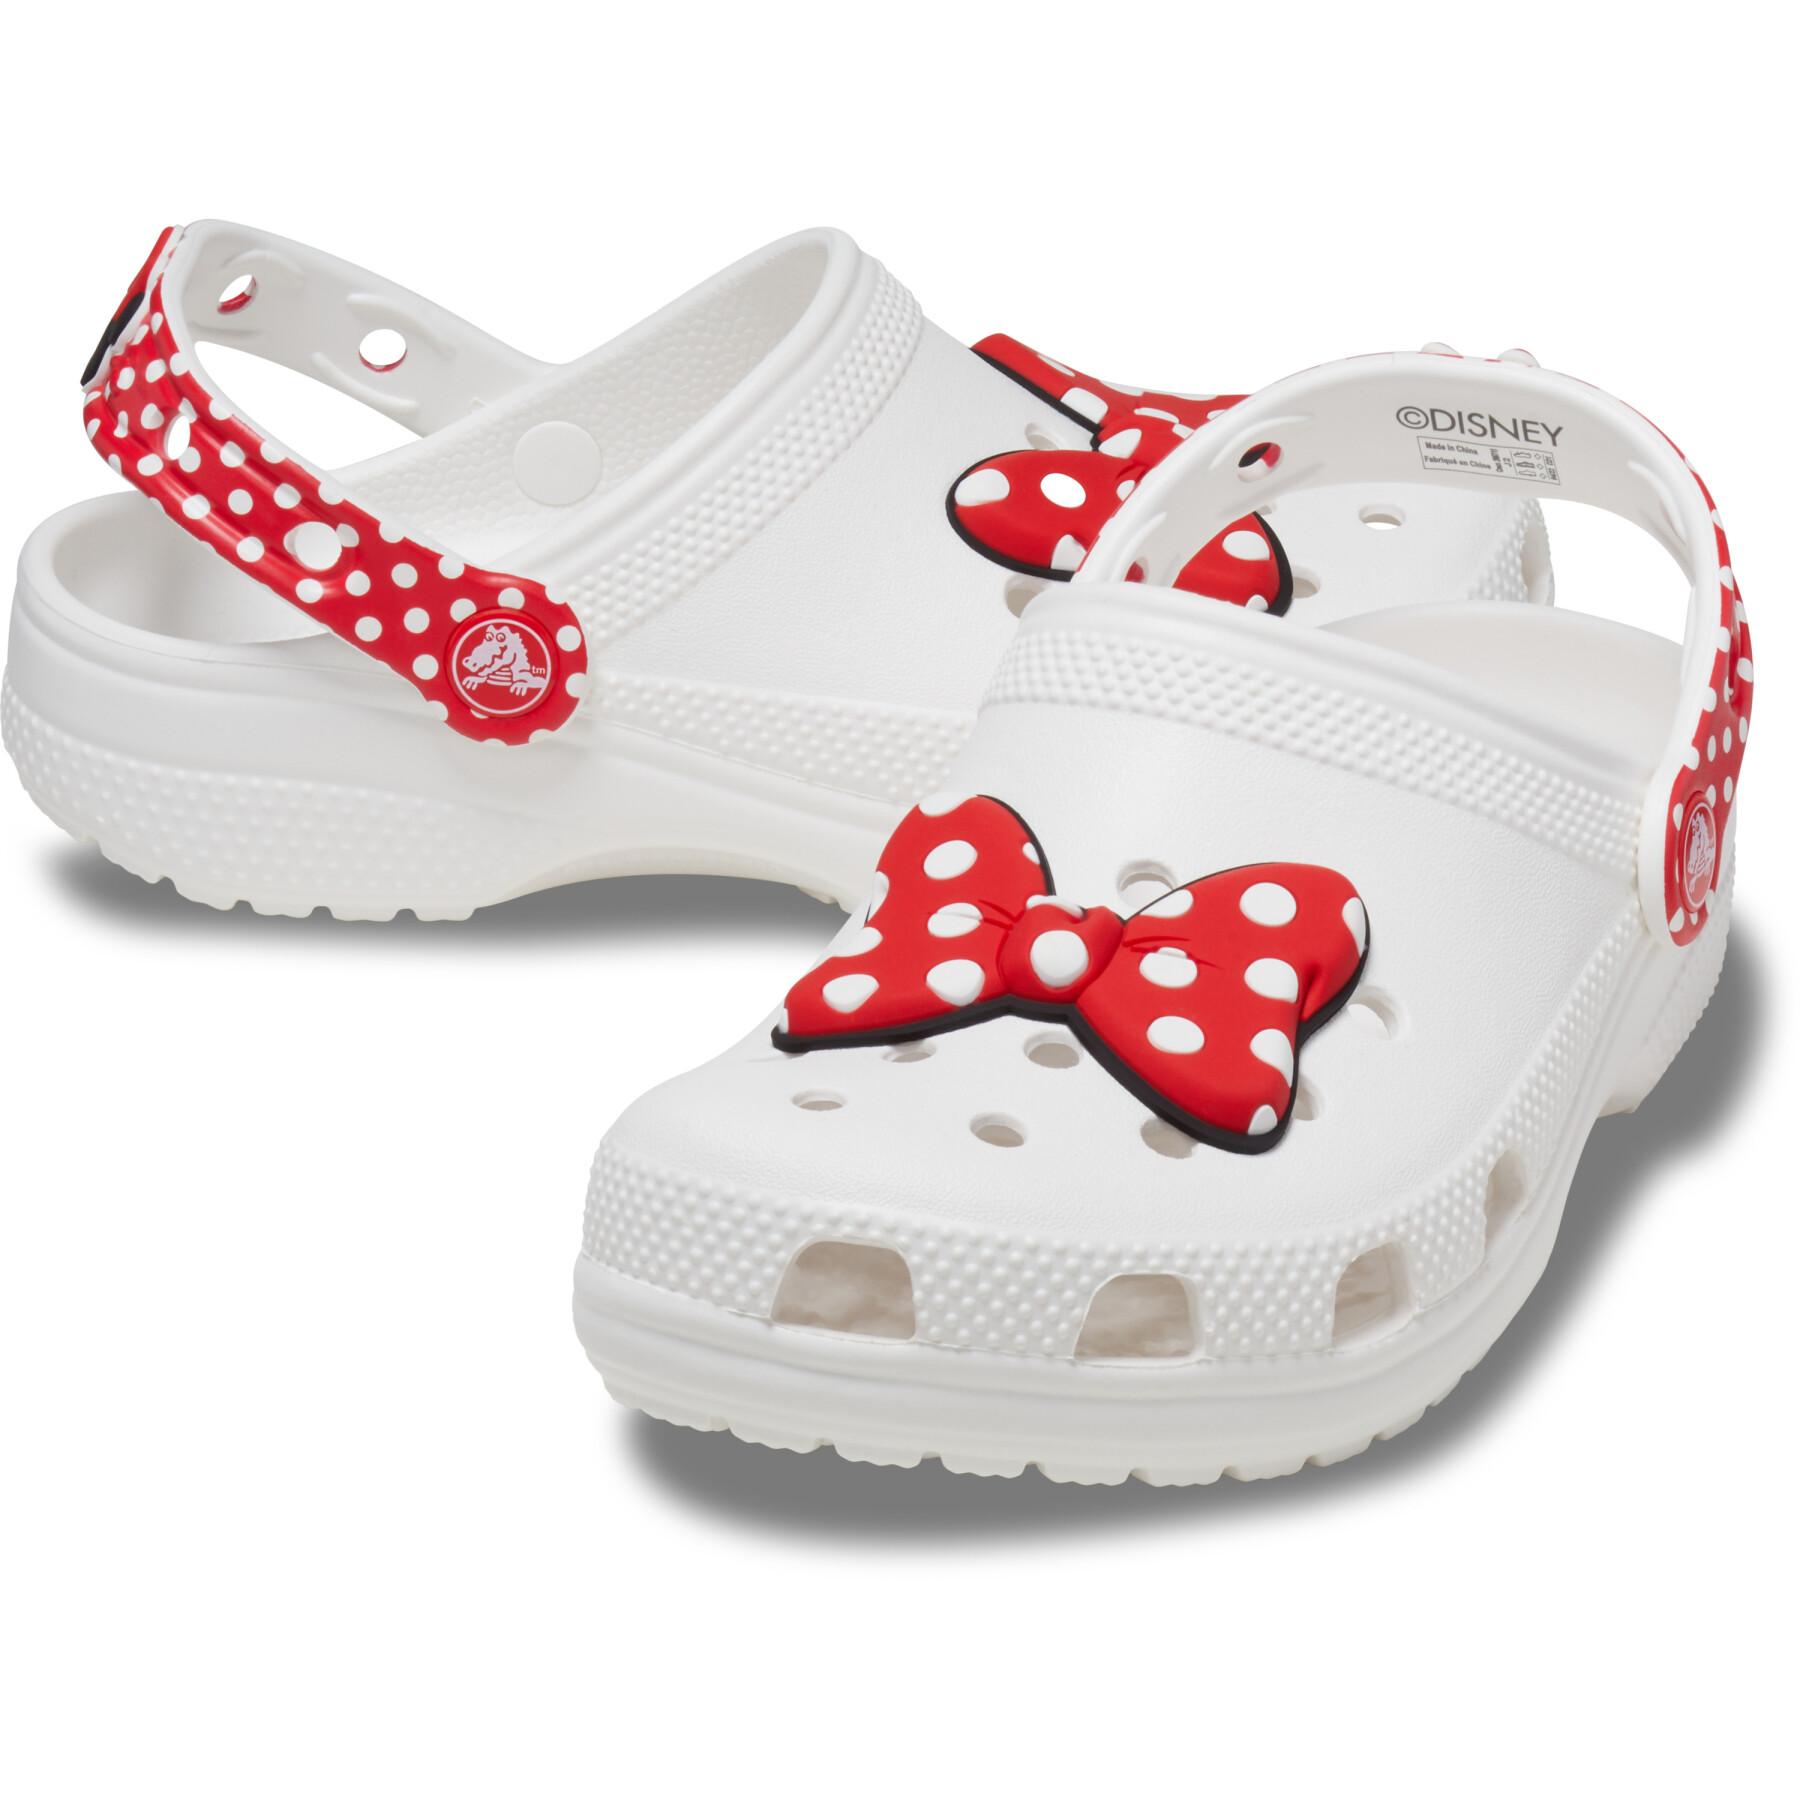 Baby clogs Crocs Disney Minnie Mouse